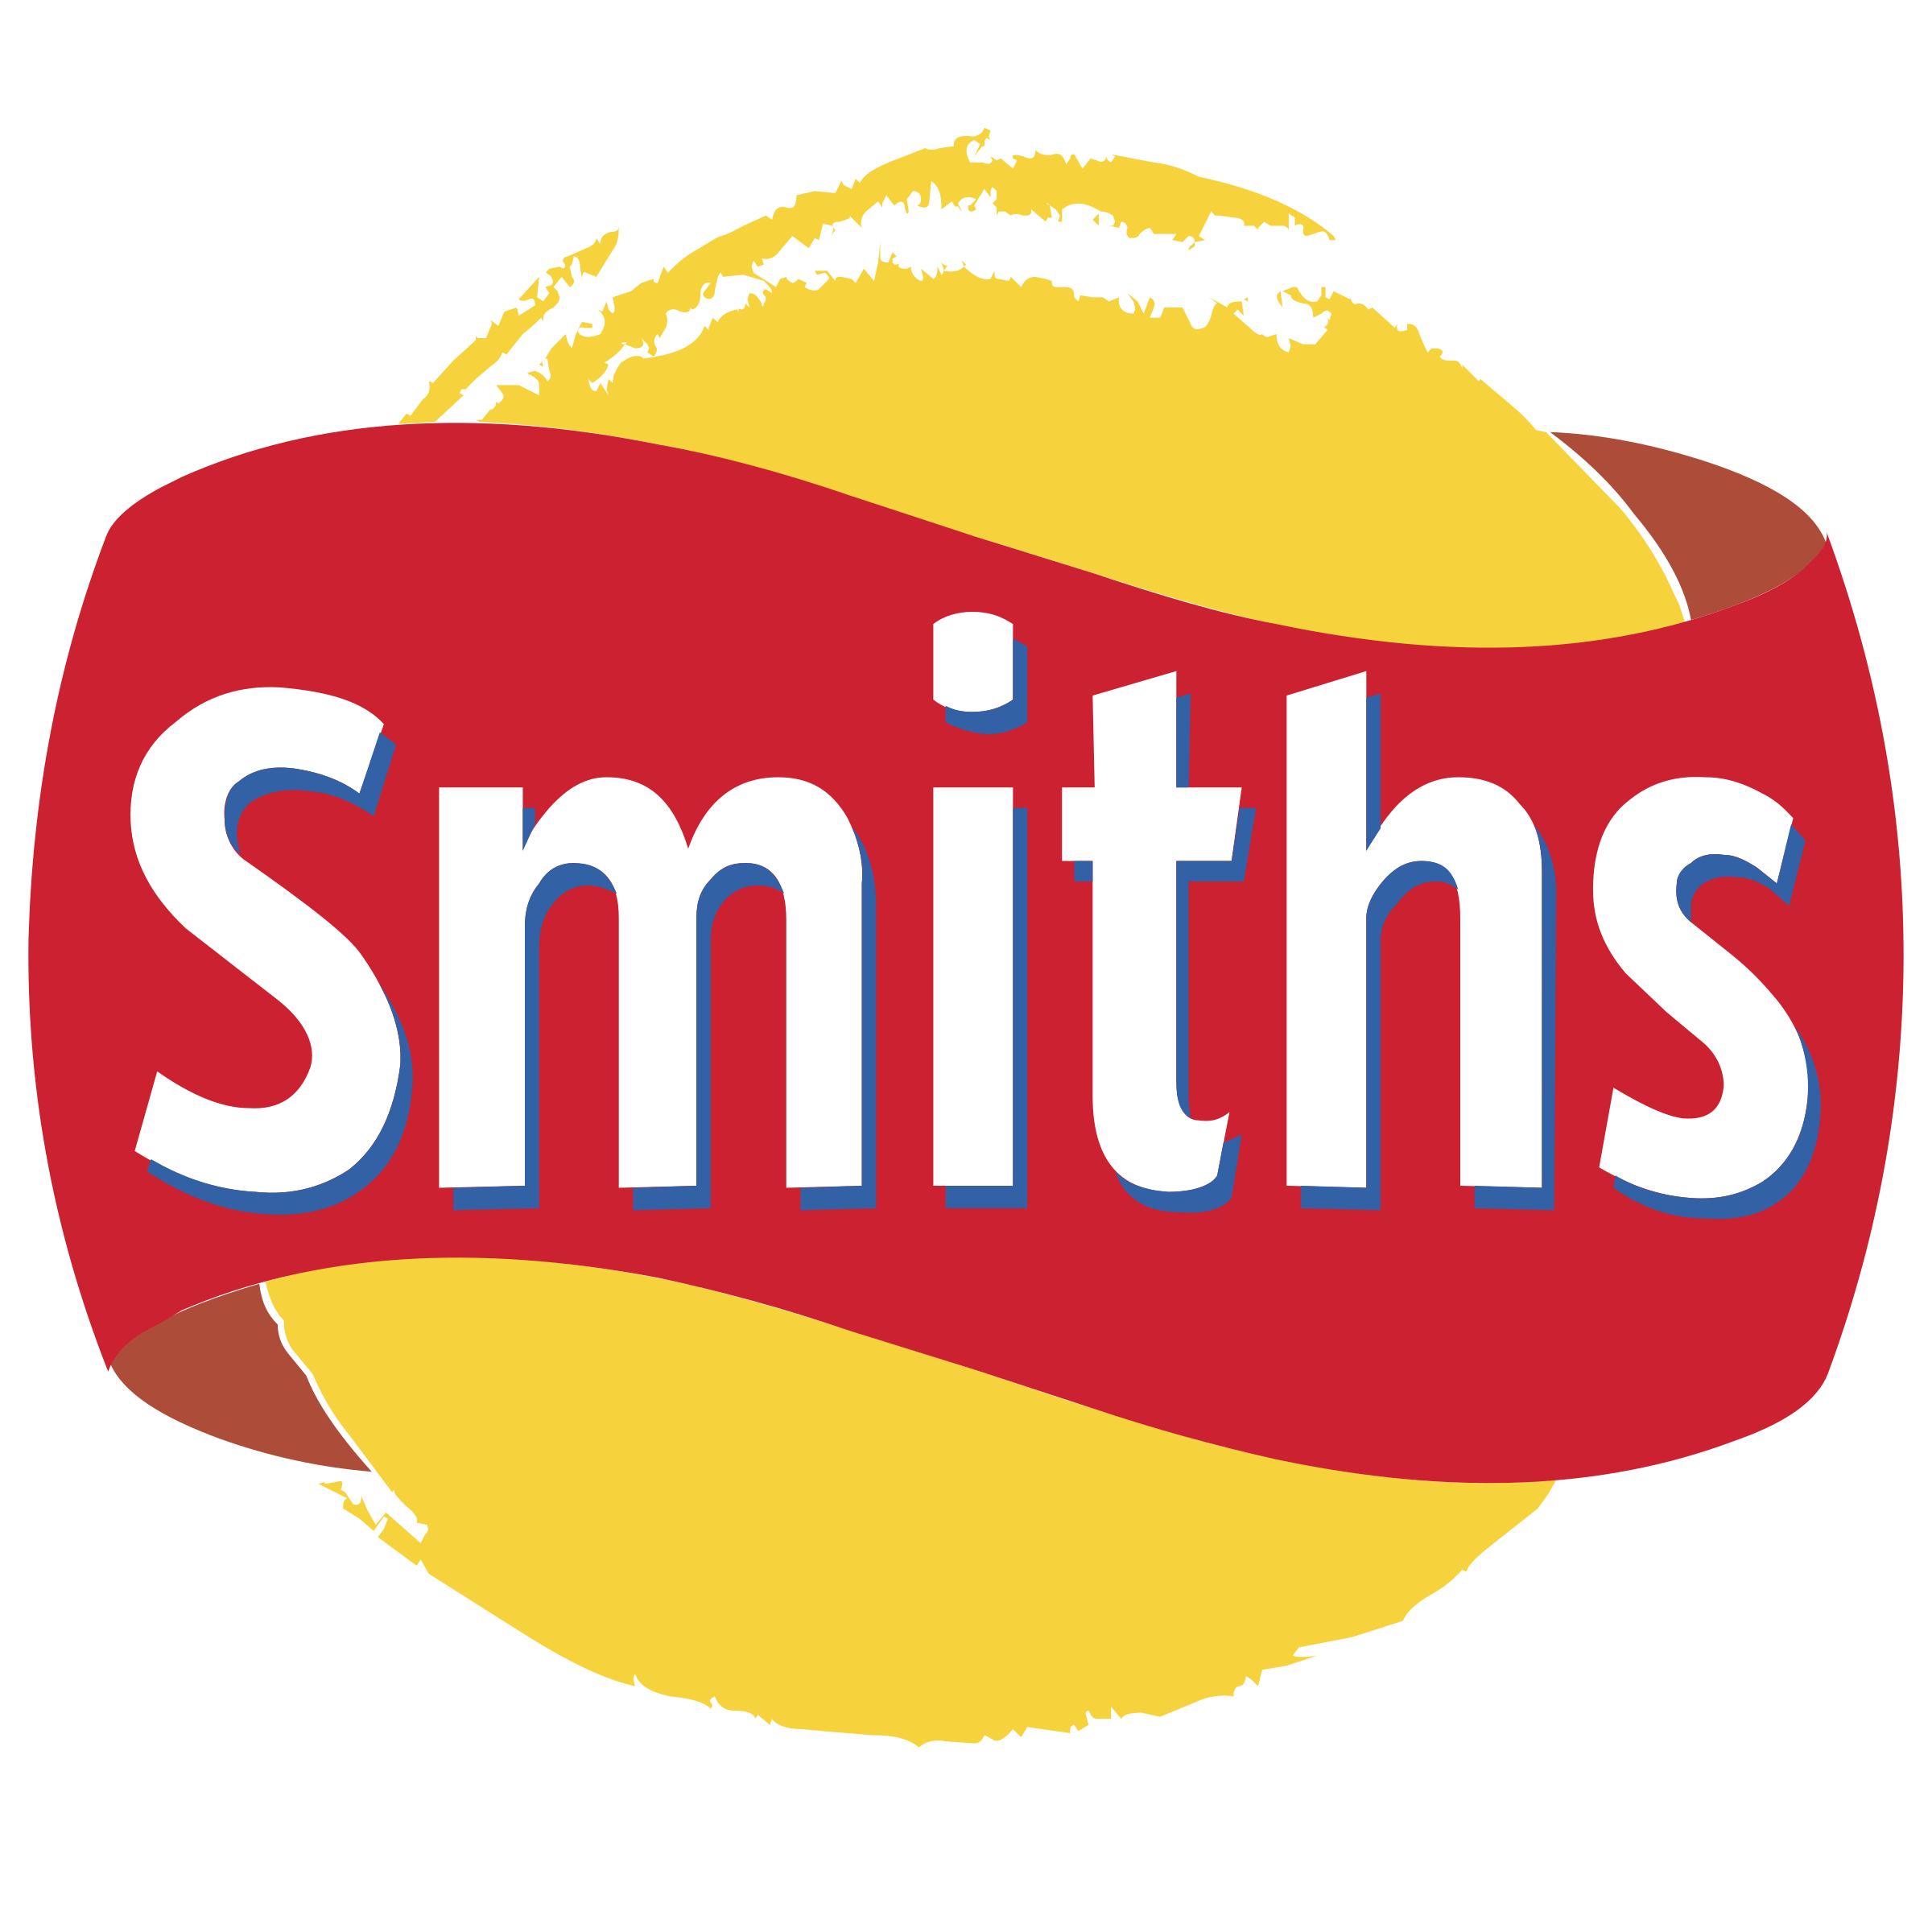 Smiths Logo - Smiths Chips Logo PNG Transparent & SVG Vector - Freebie Supply